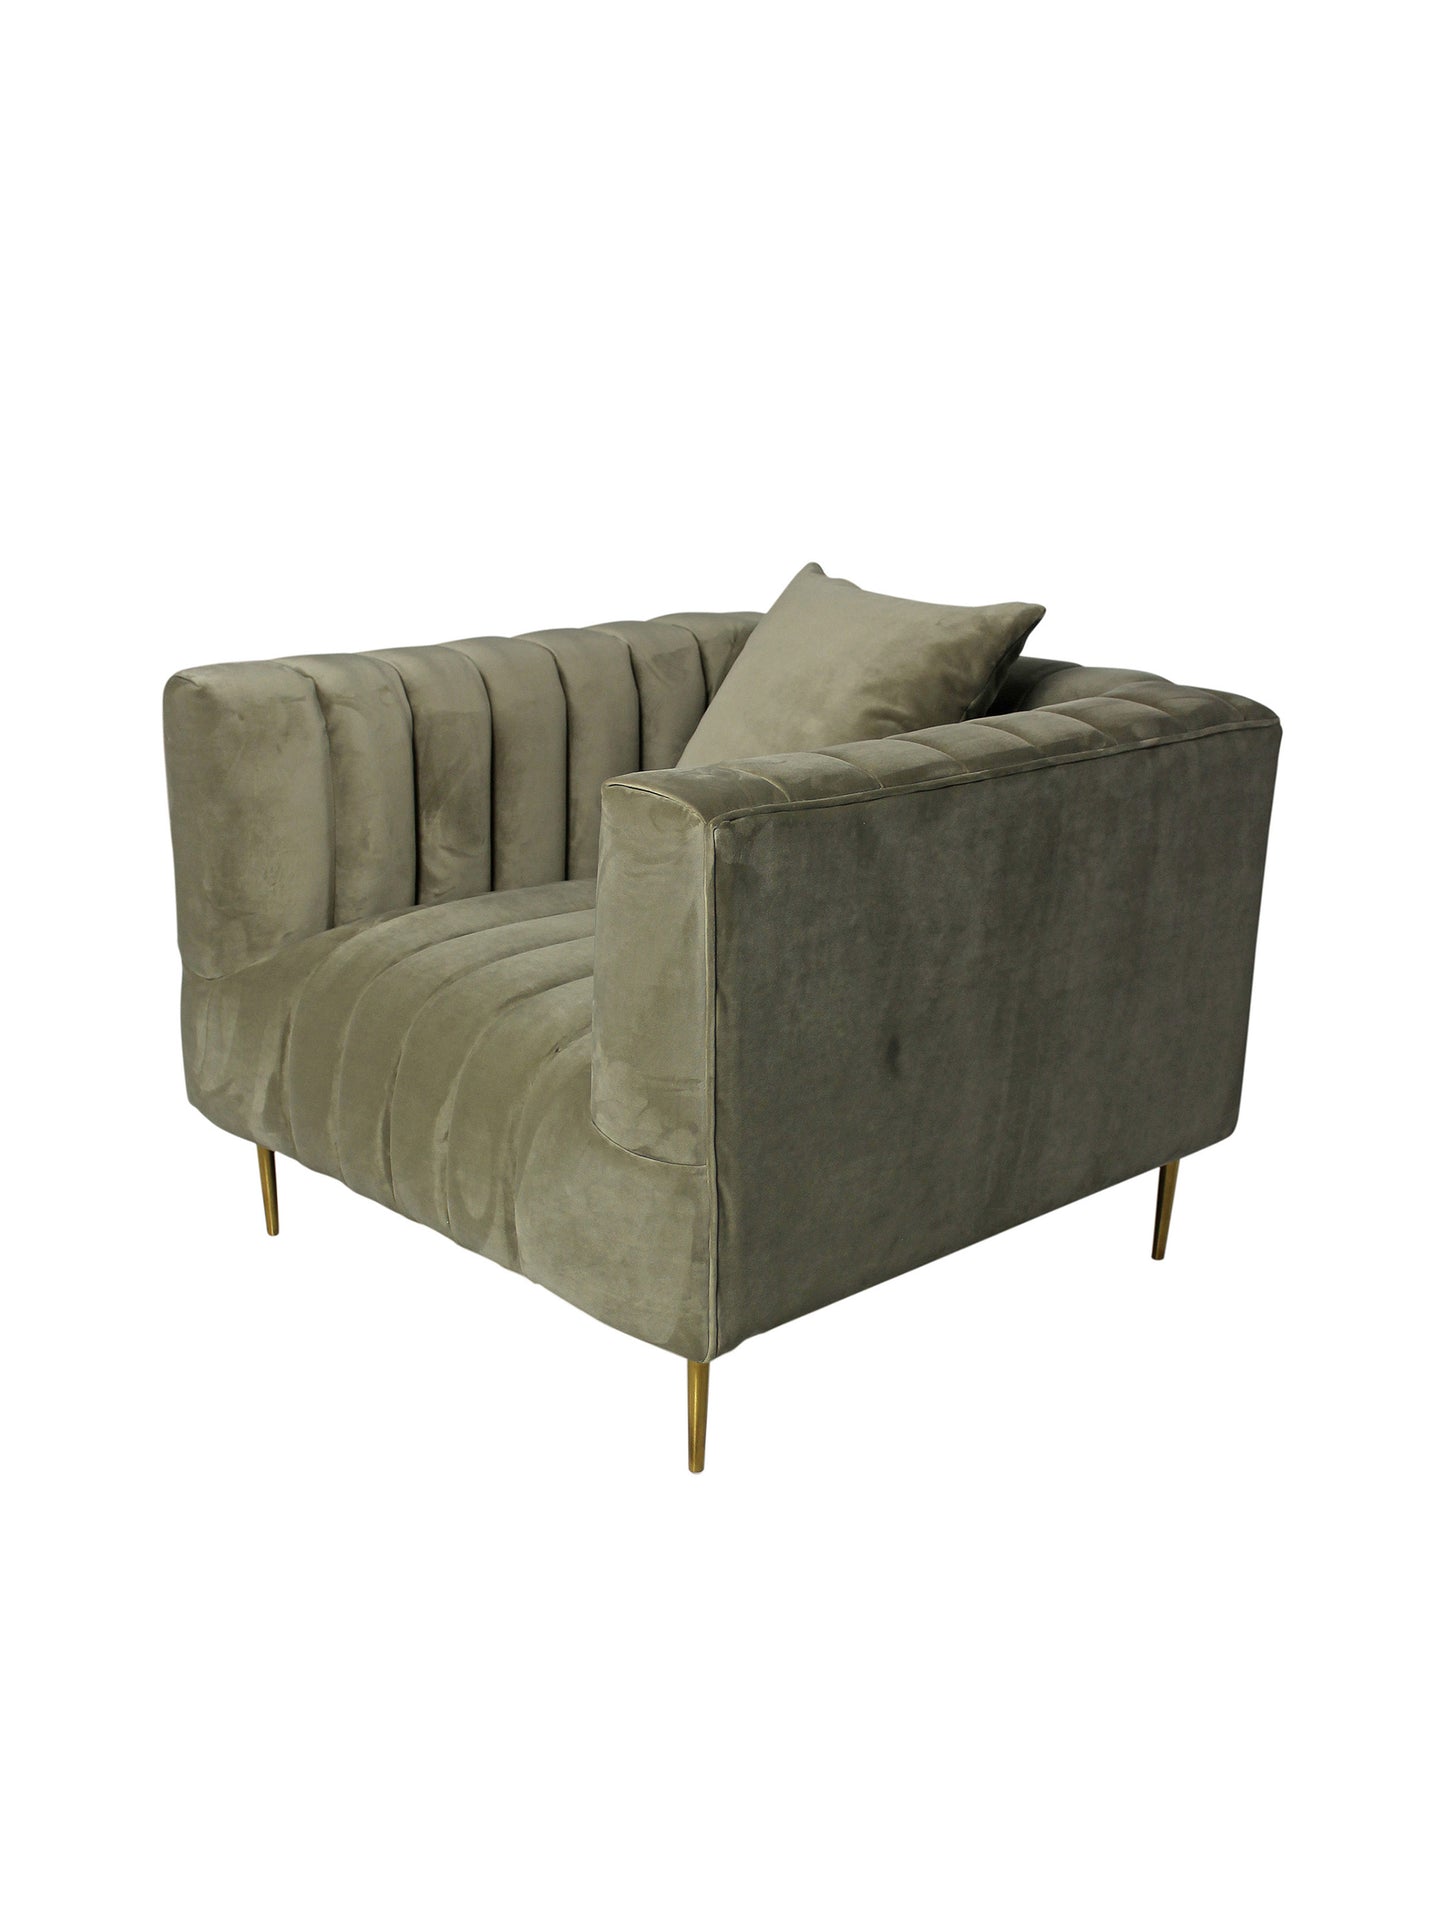 Eclectic Home Rutland Beige Sofa Chair